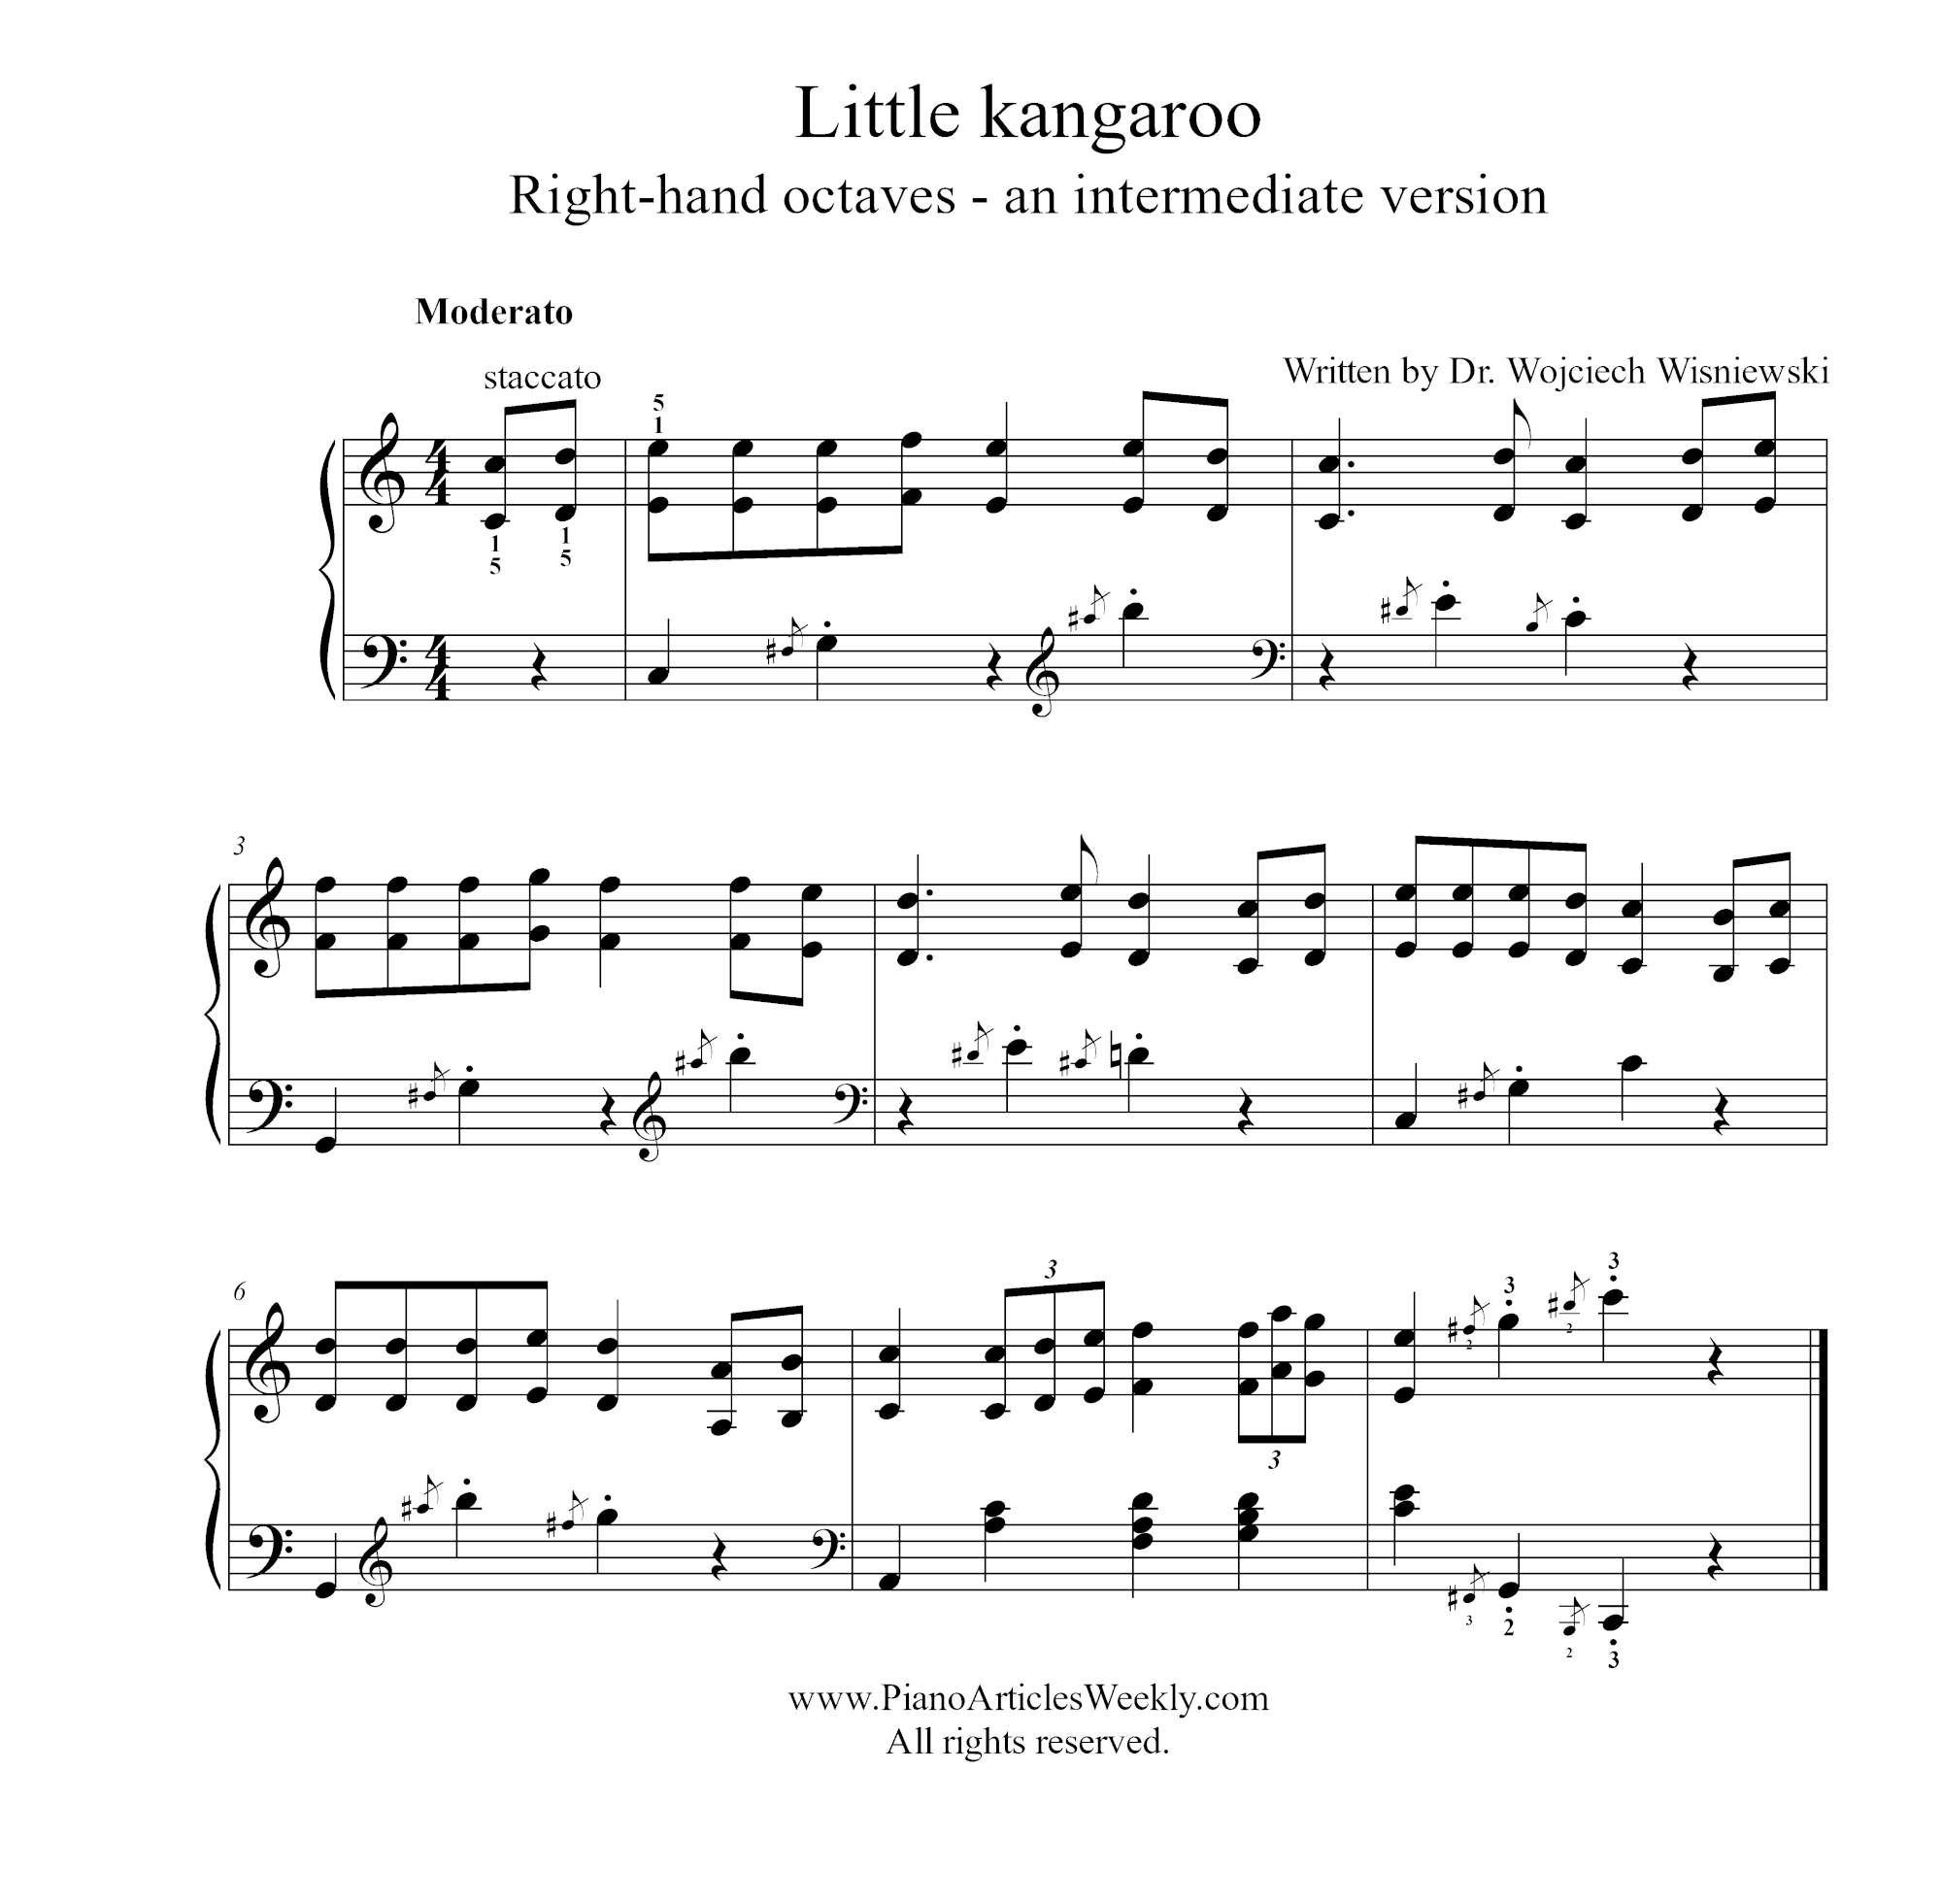 Little kangaroo - right hand octaves intermediate